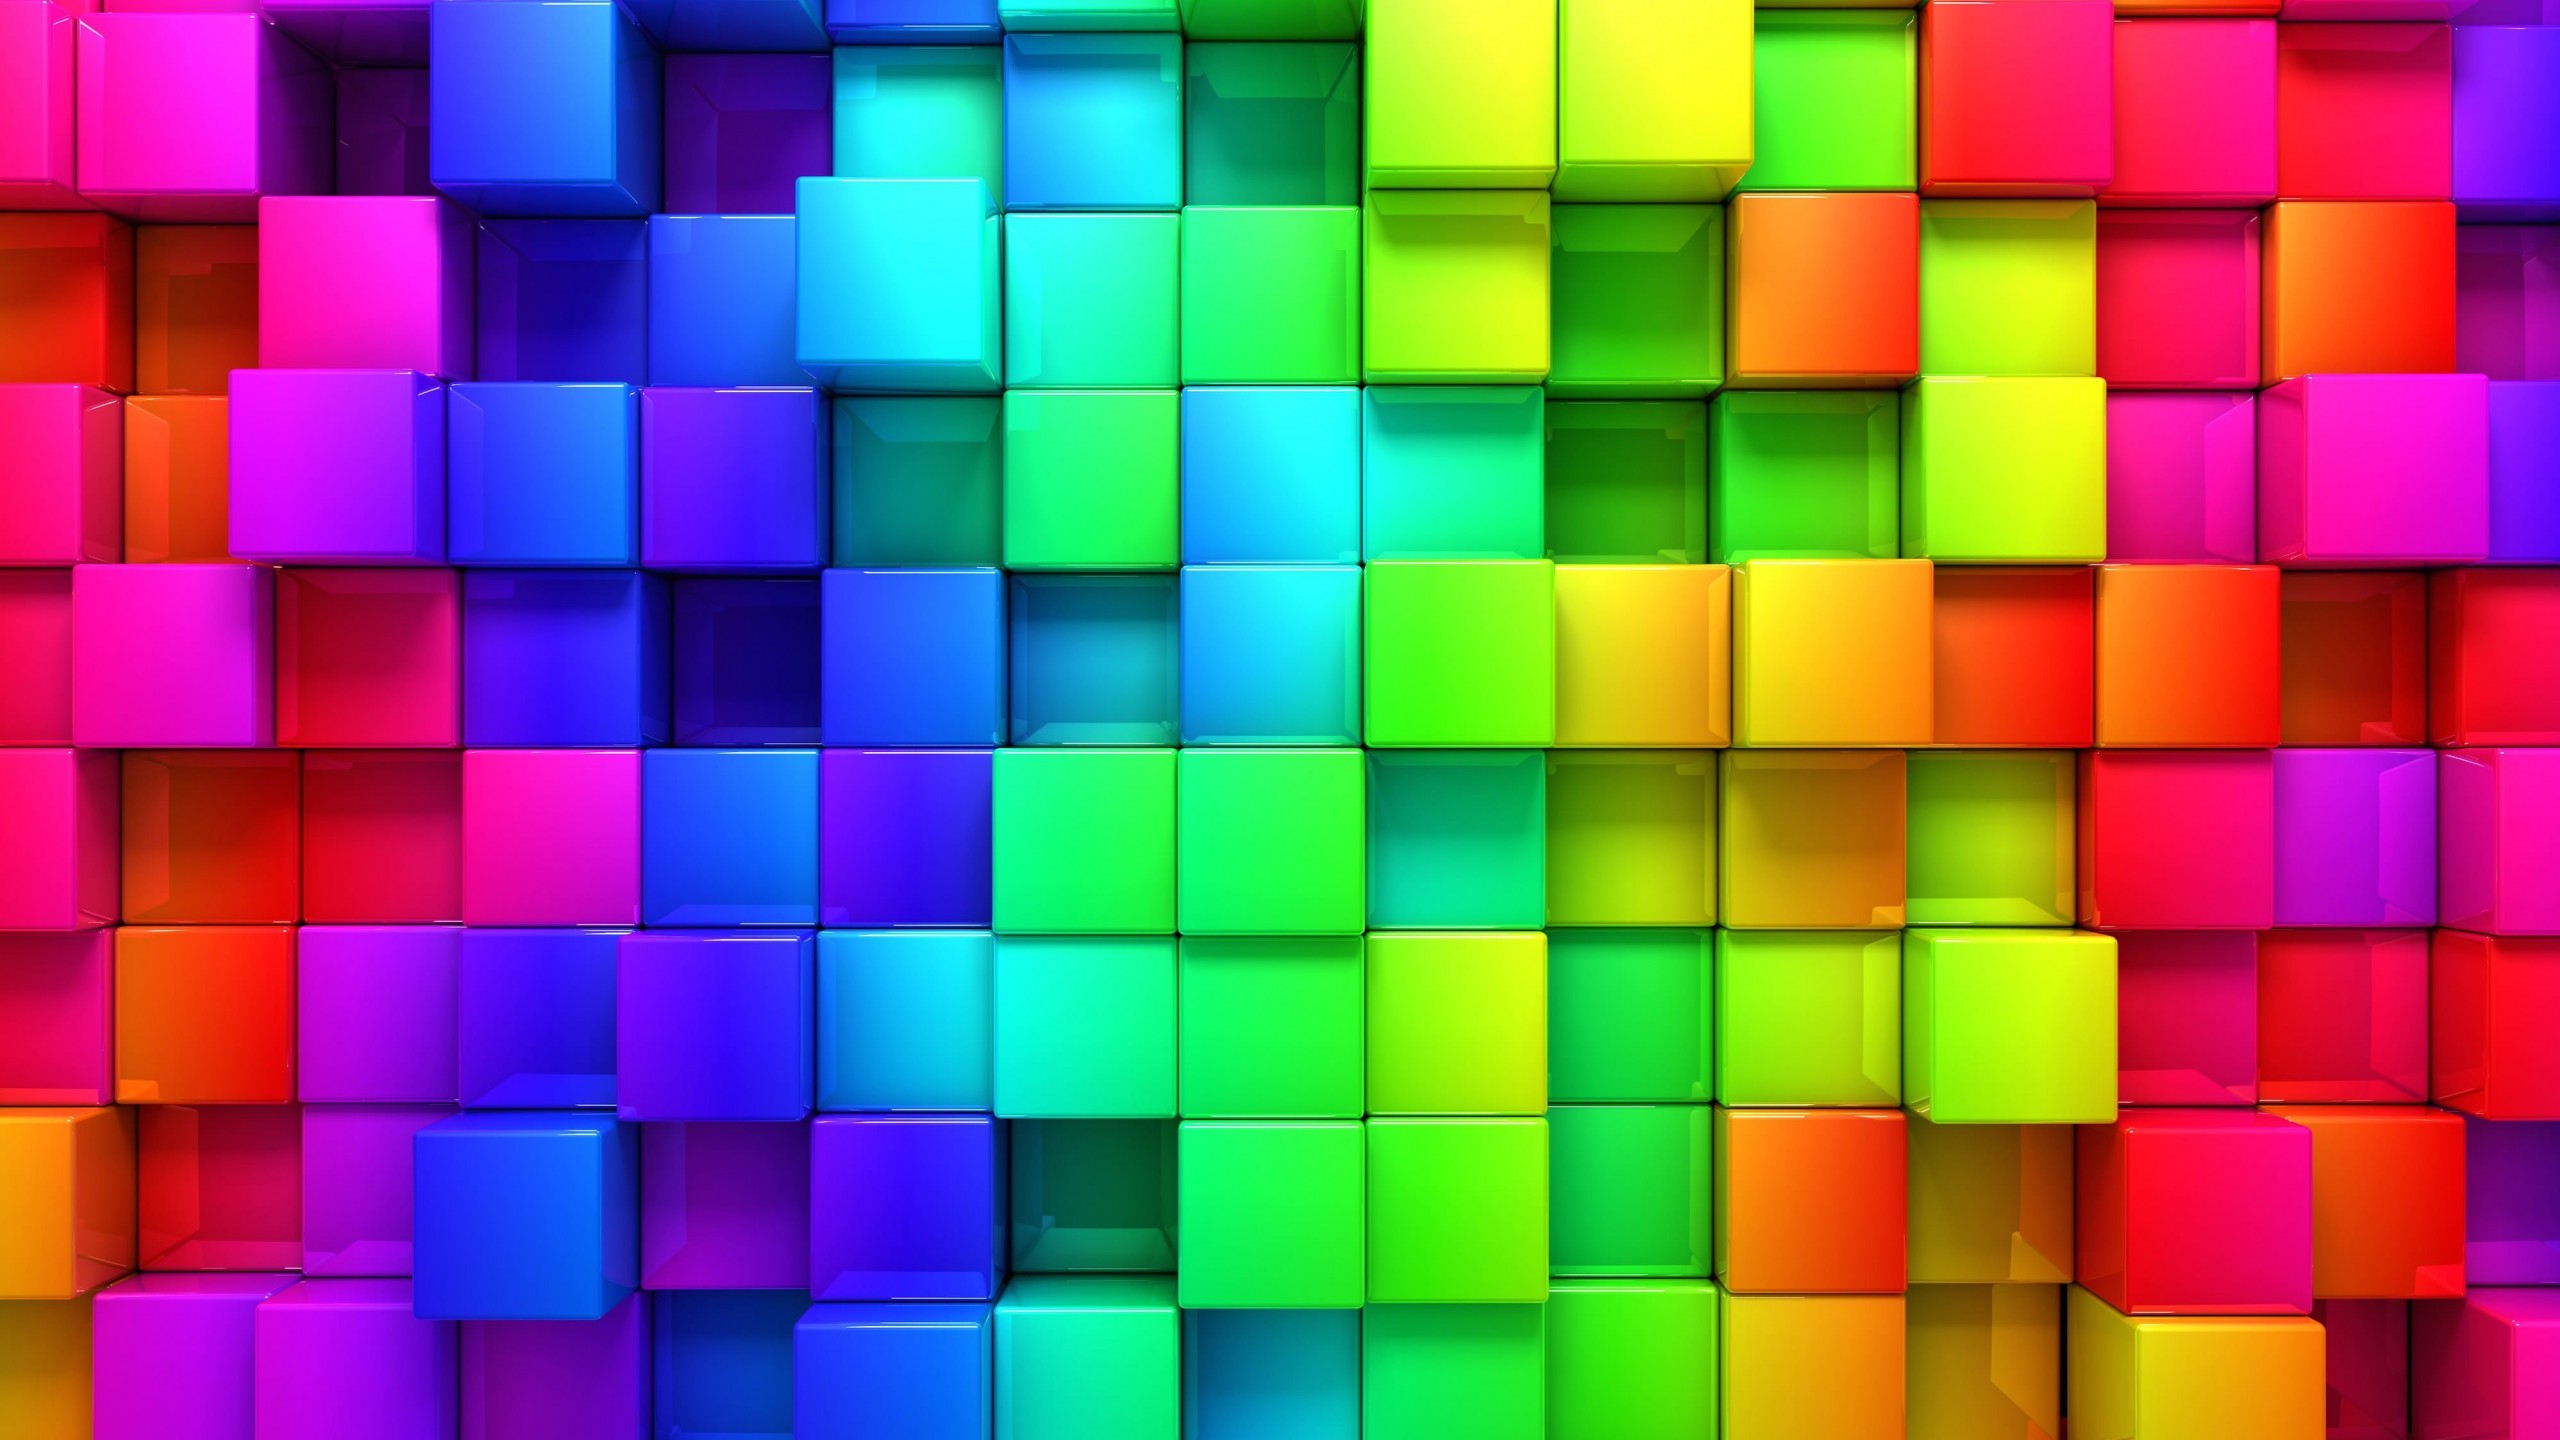 Cubic Rainbow Wallpaper for Social Media YouTube Channel Art